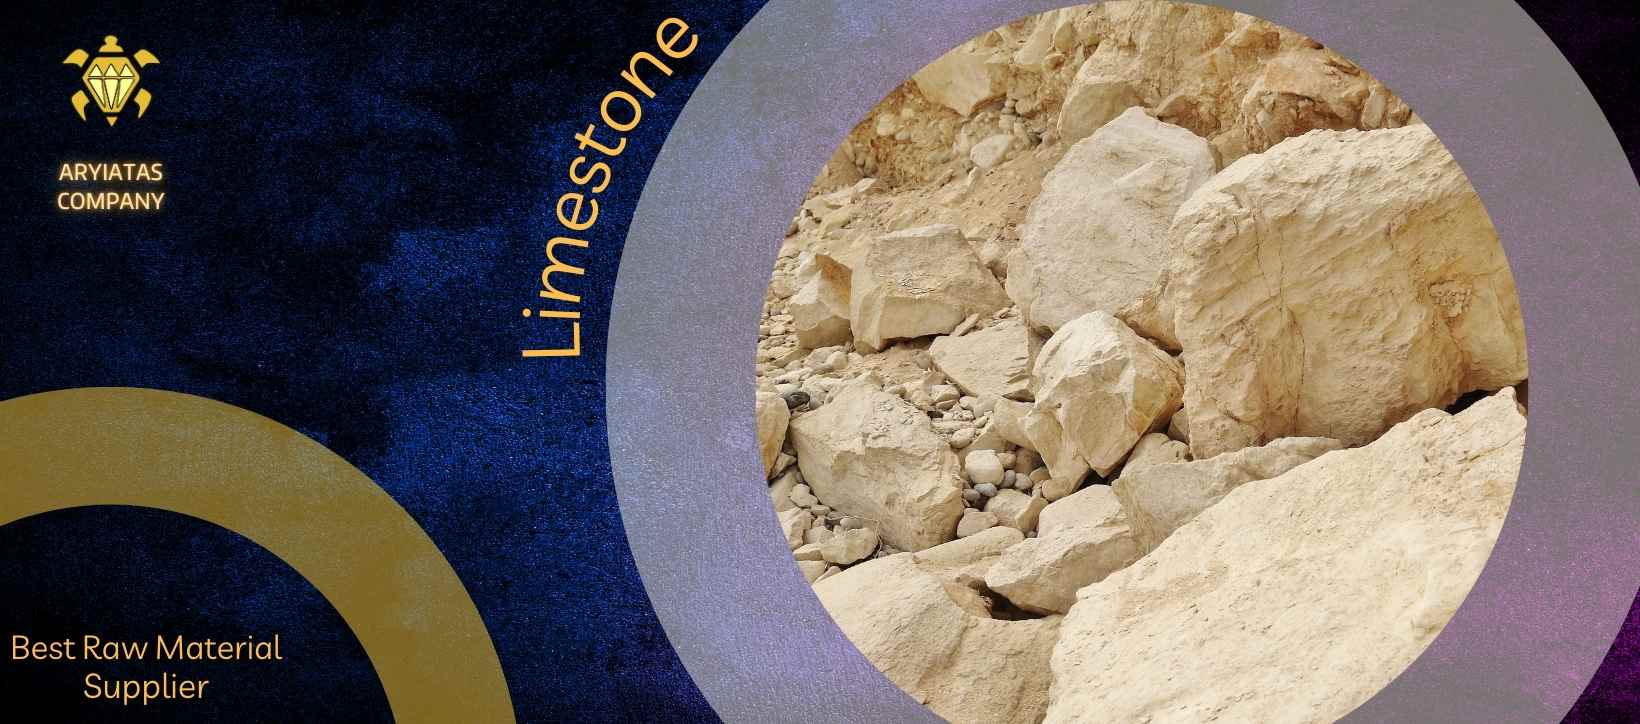 Limestone | Cement raw material | Aryiatas company